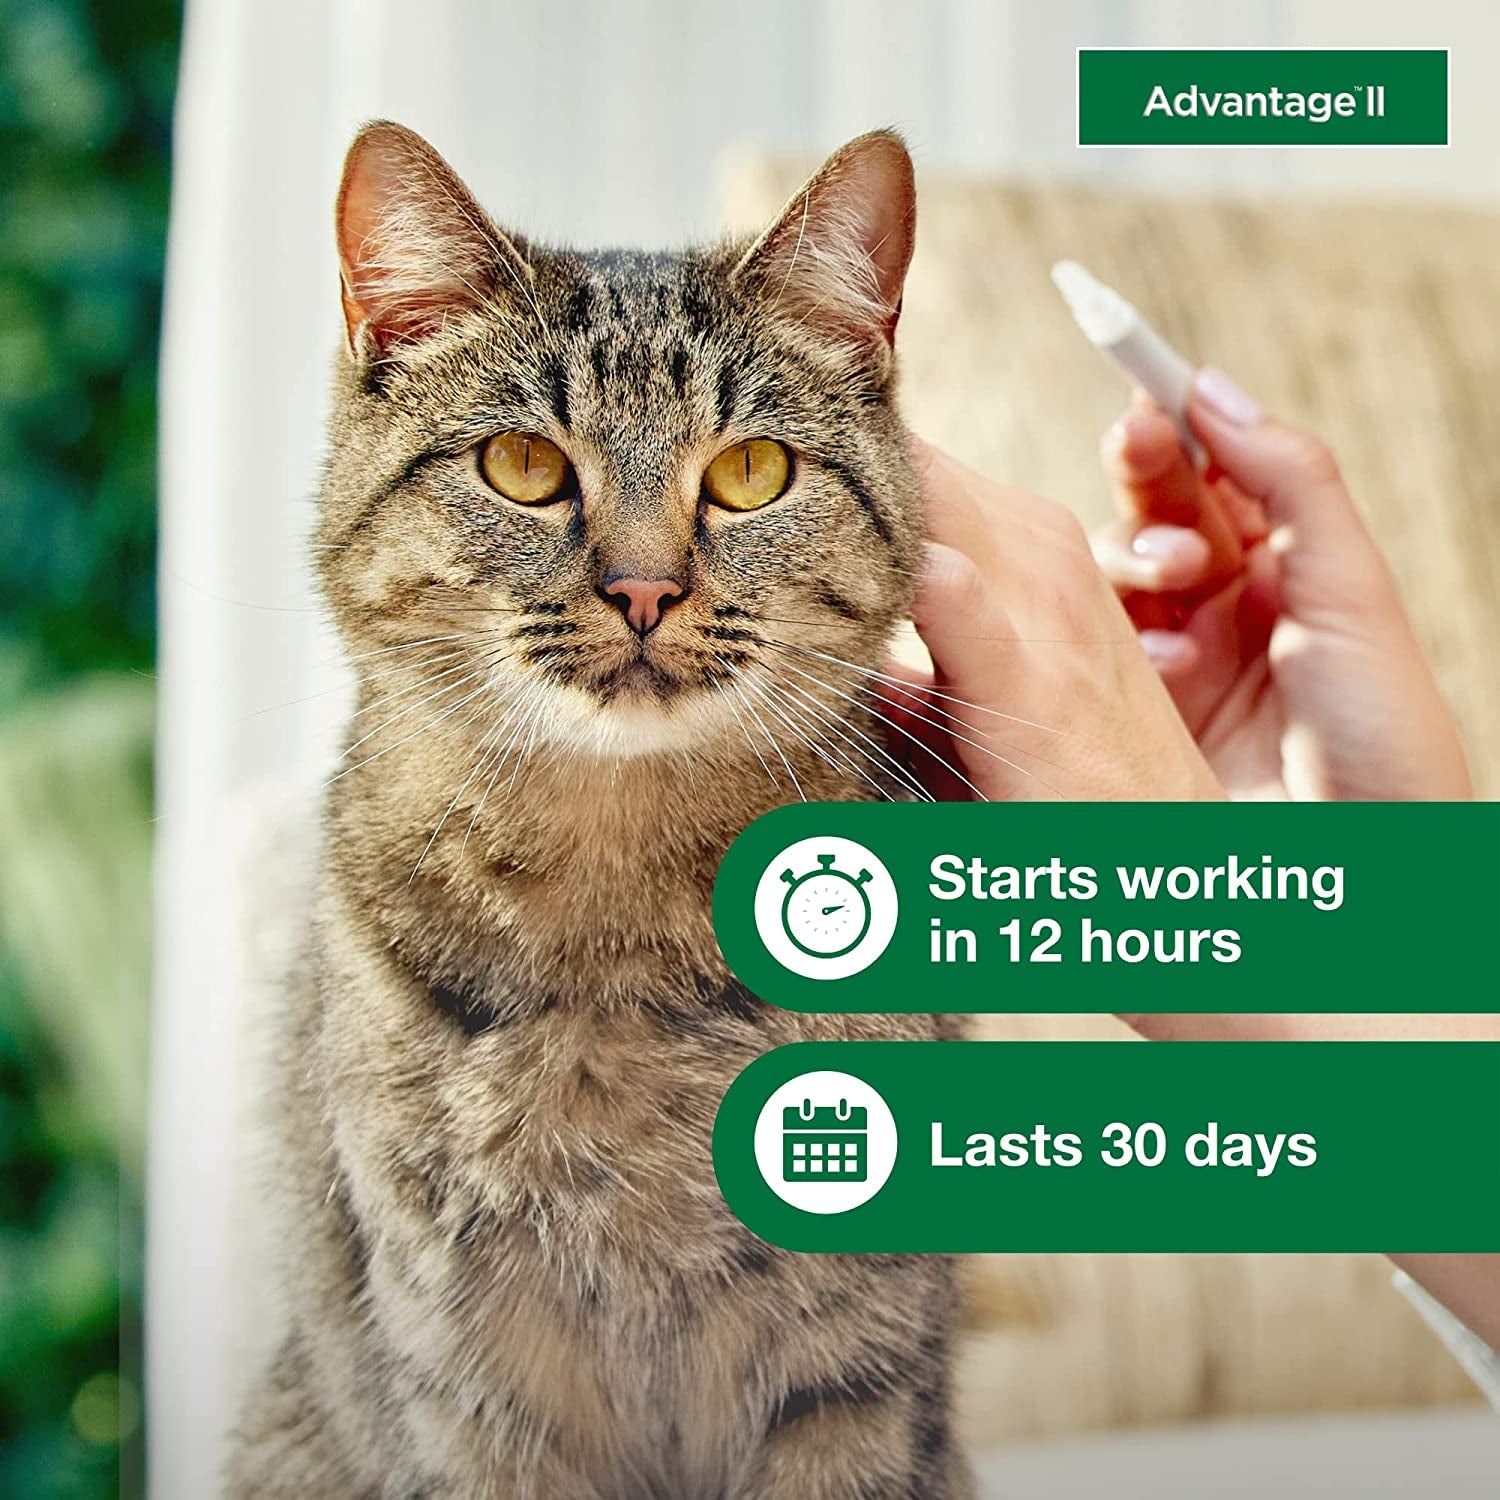 II Large Cat Vet-Recommended Flea Treatment & Prevention